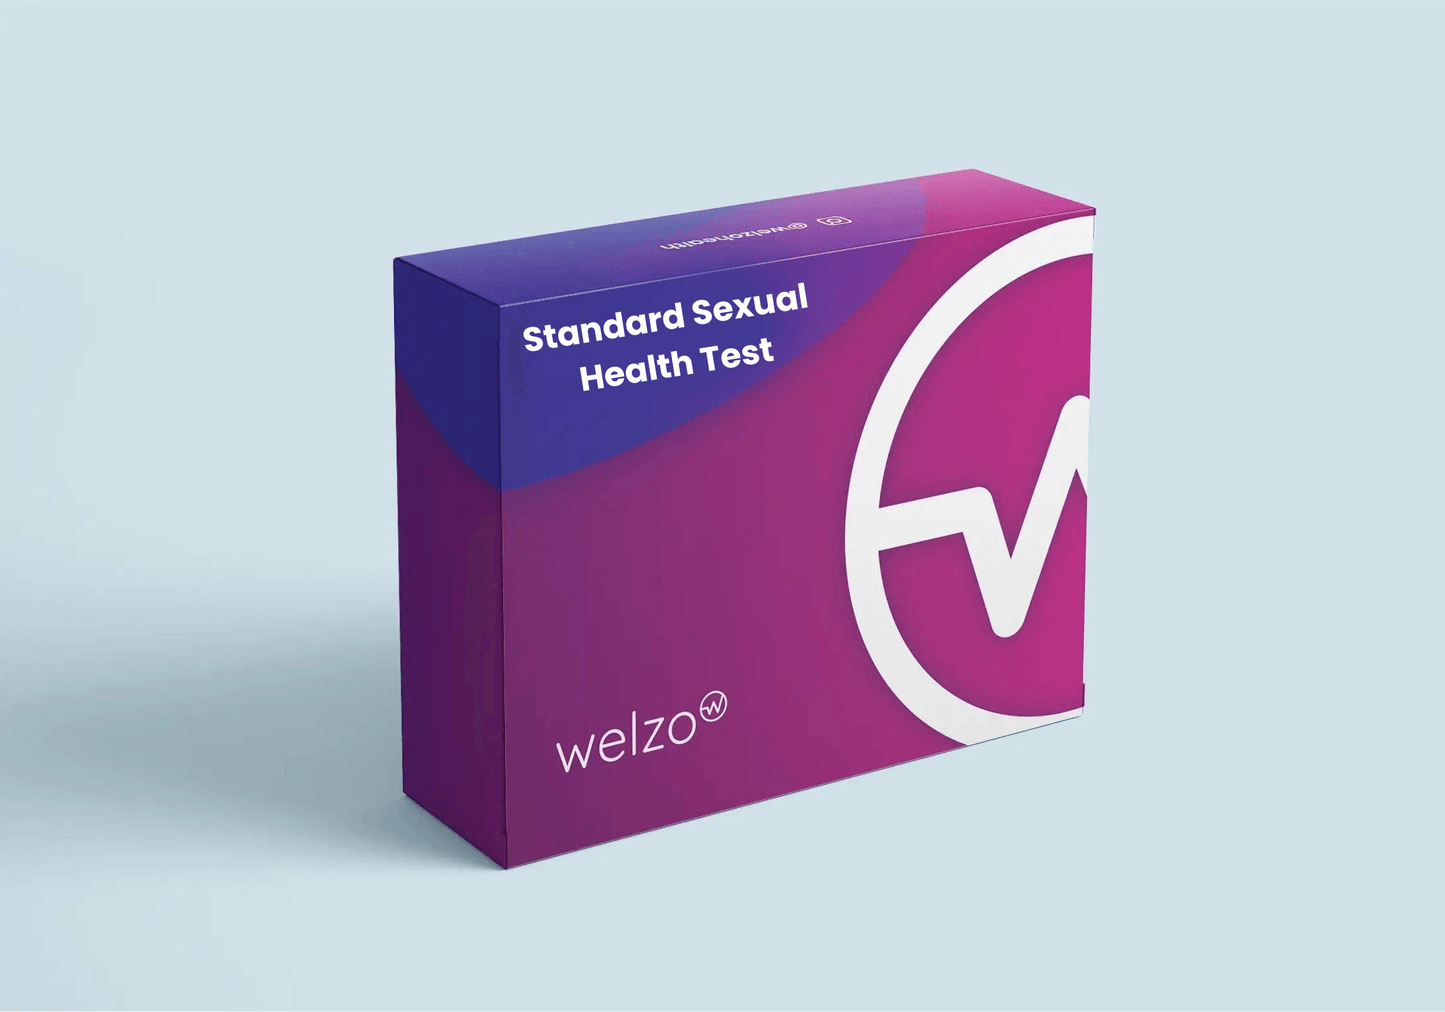 Standard 6 Sexual Health Test - welzo